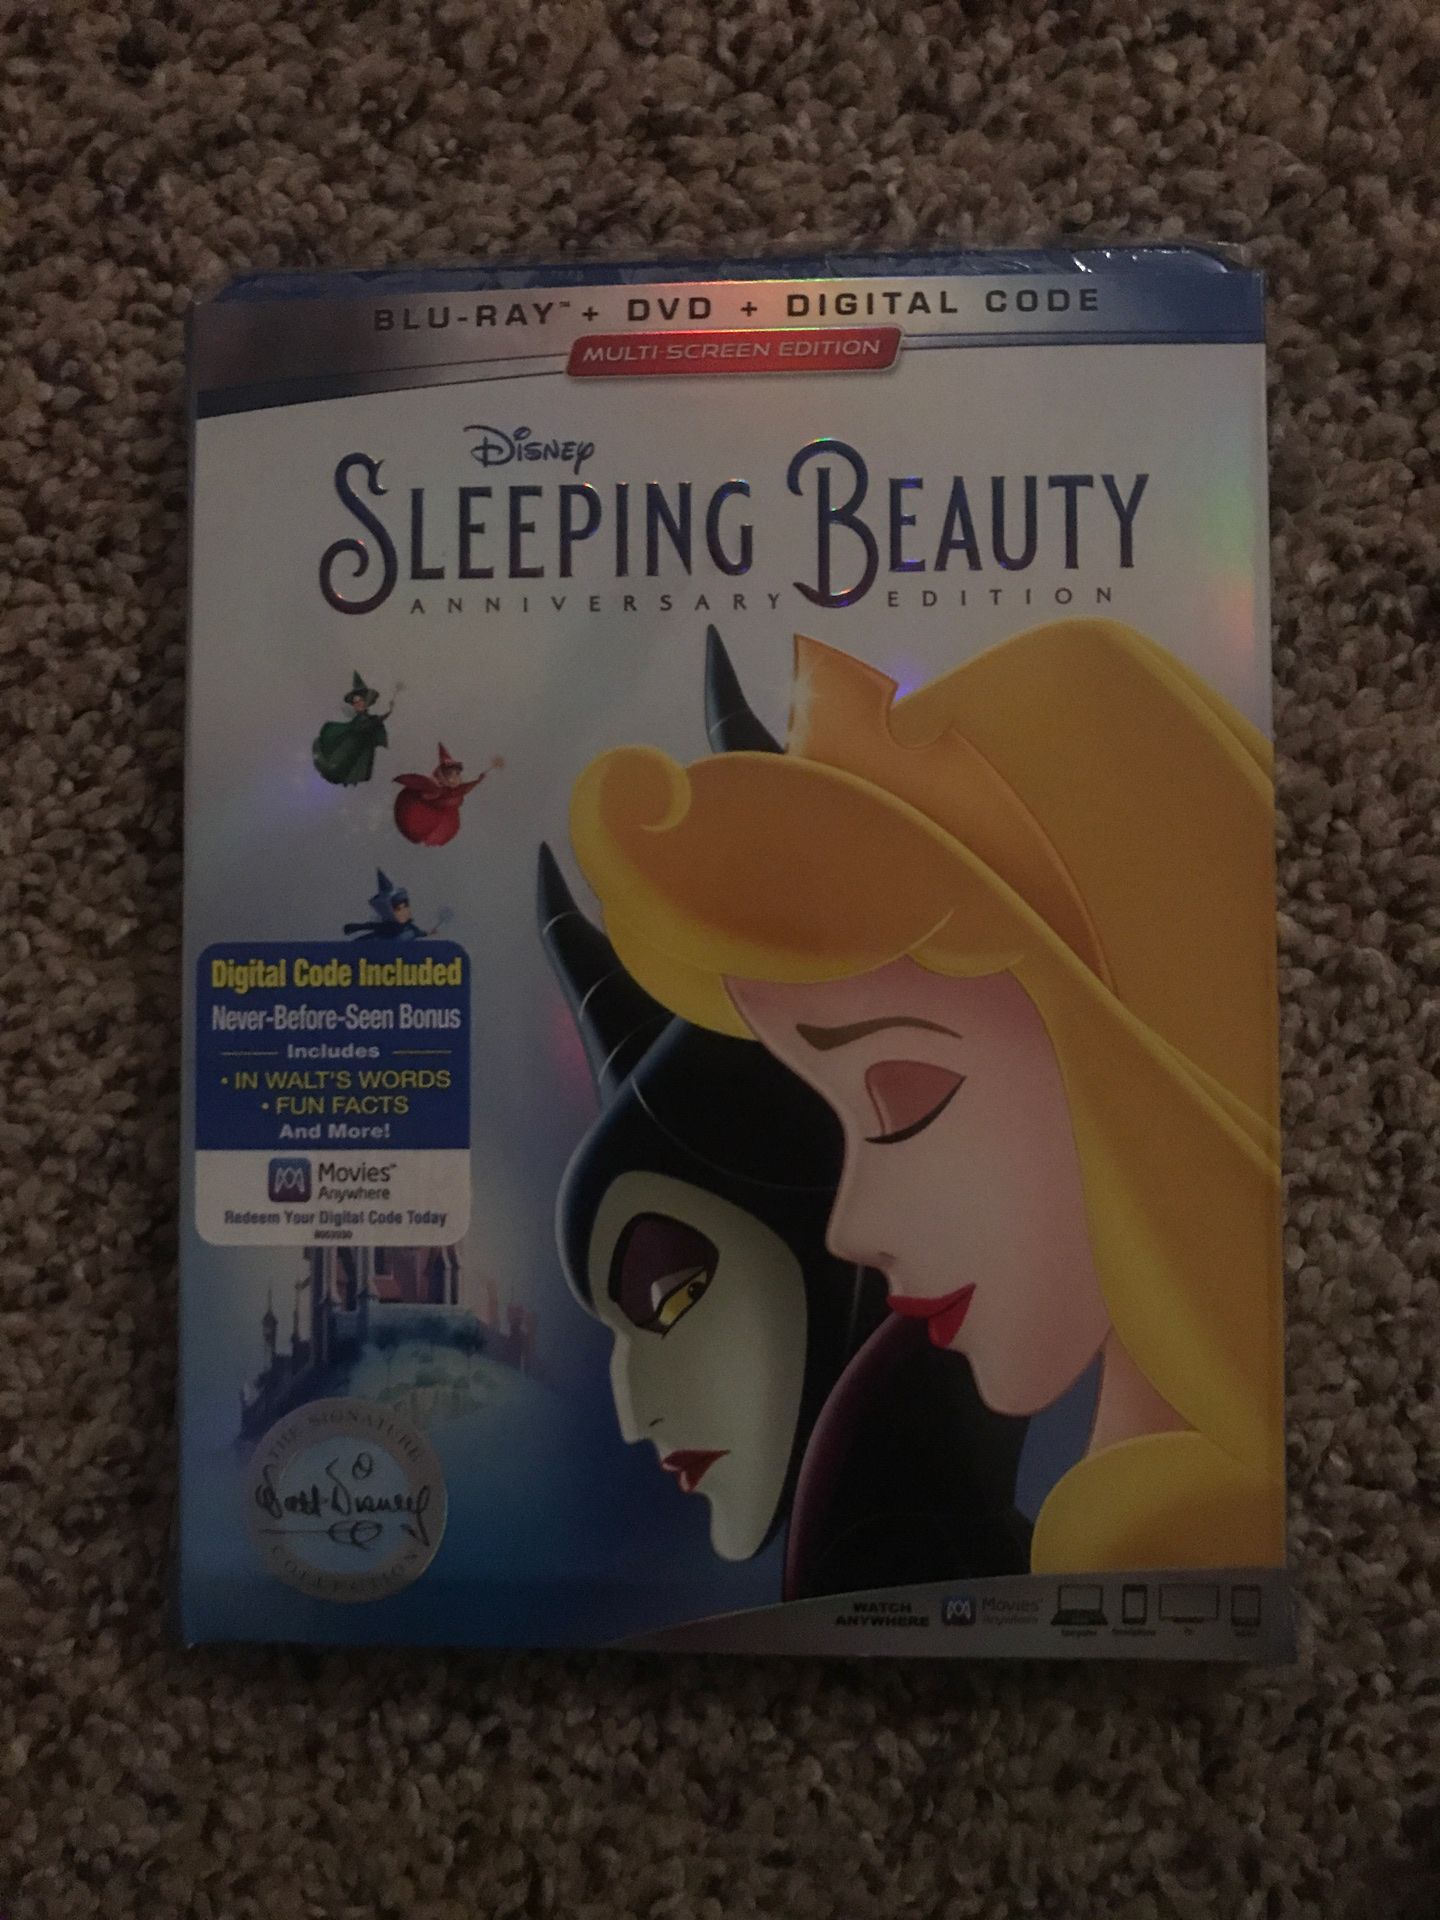 Disney’s Sleeping beauty BLU RAY DVD DIGITAL CODE NEW UNOPENED